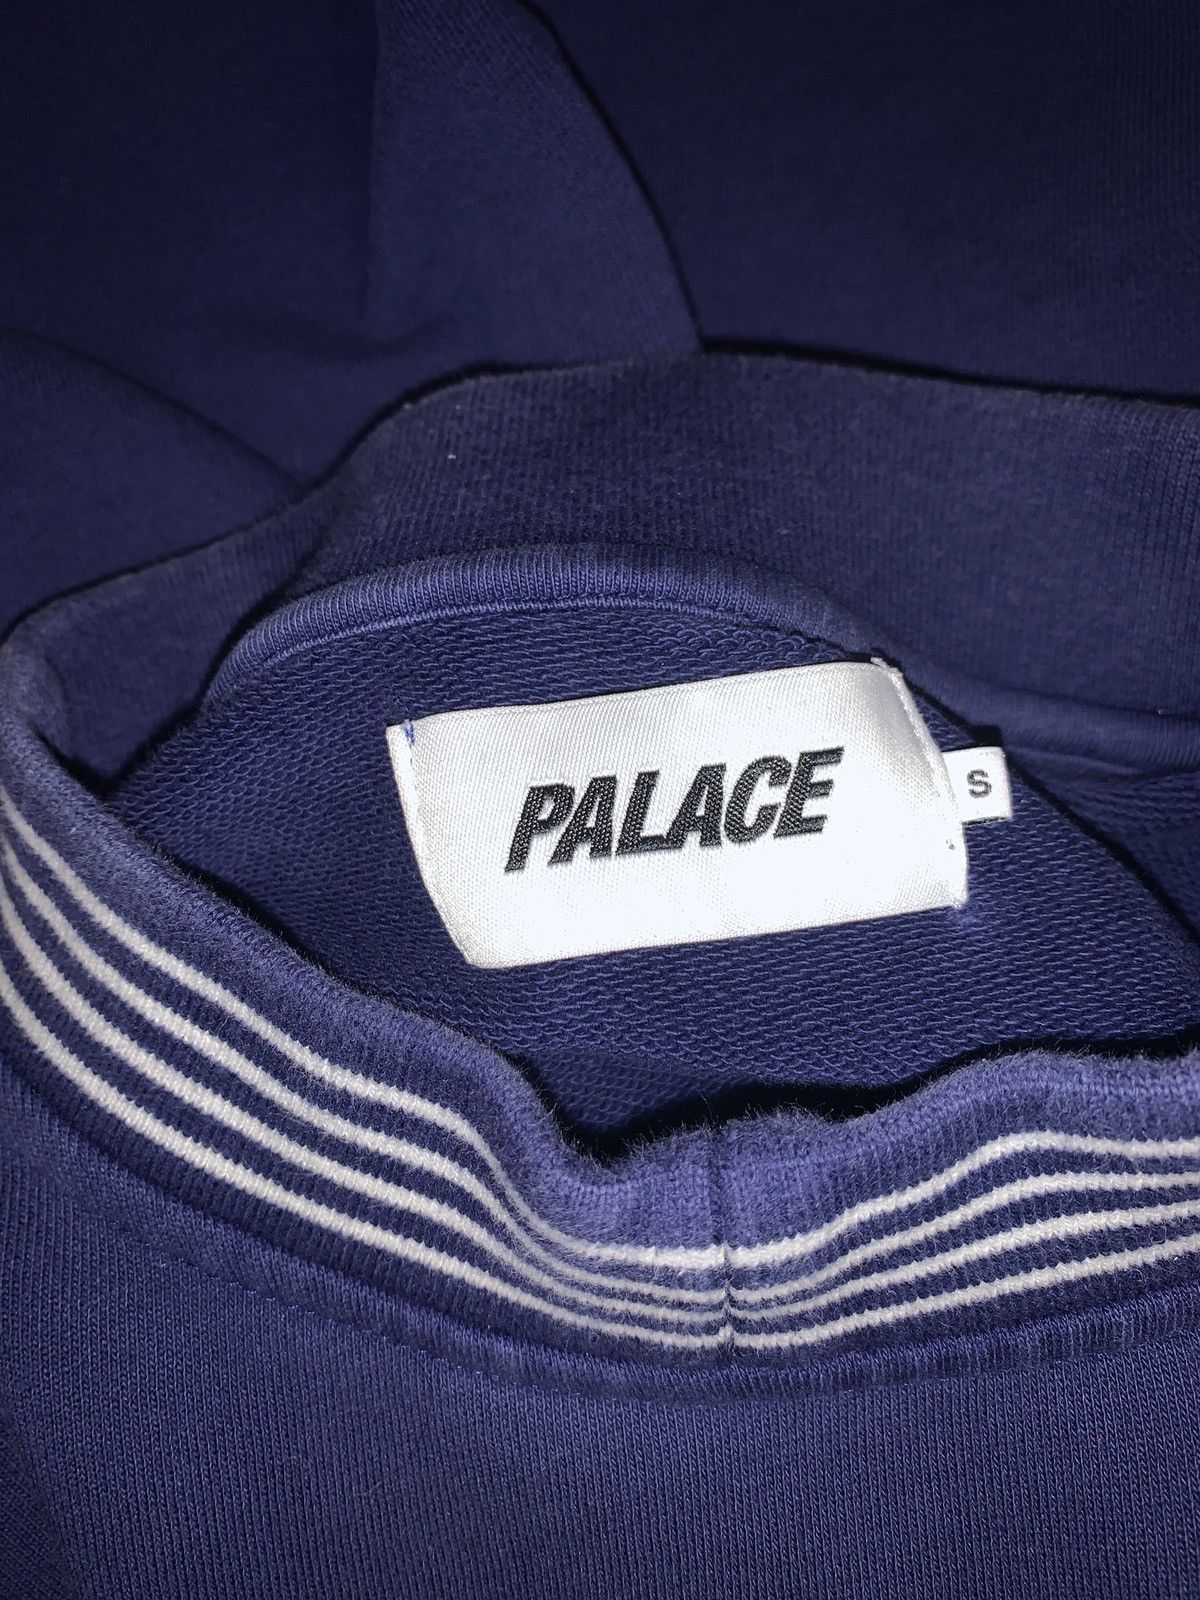 Palace Palace pullover sweater Size US S / EU 44-46 / 1 - 4 Thumbnail